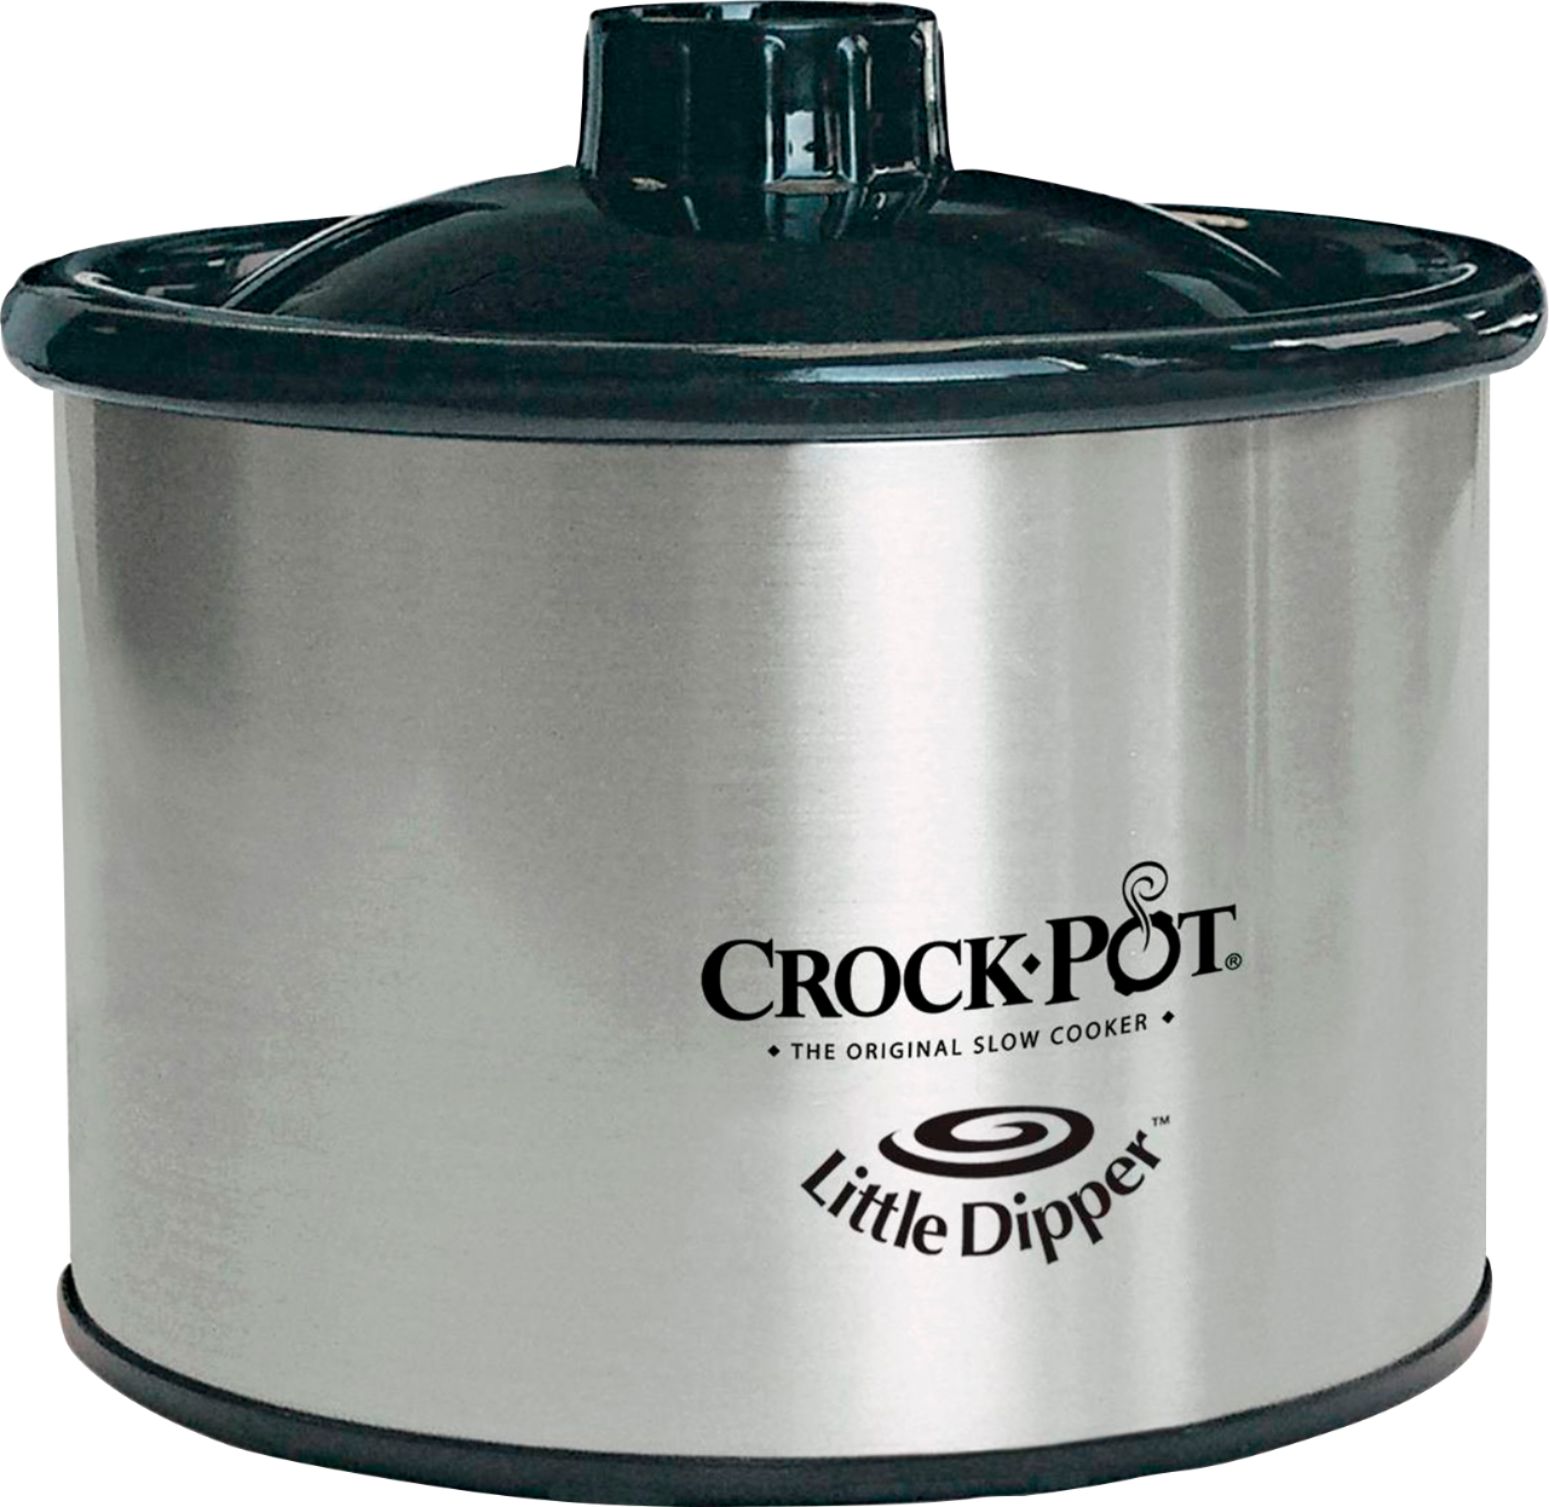 Crock-Pot 16-Ounce Little Triple Dipper Slow Cooker, Silver and